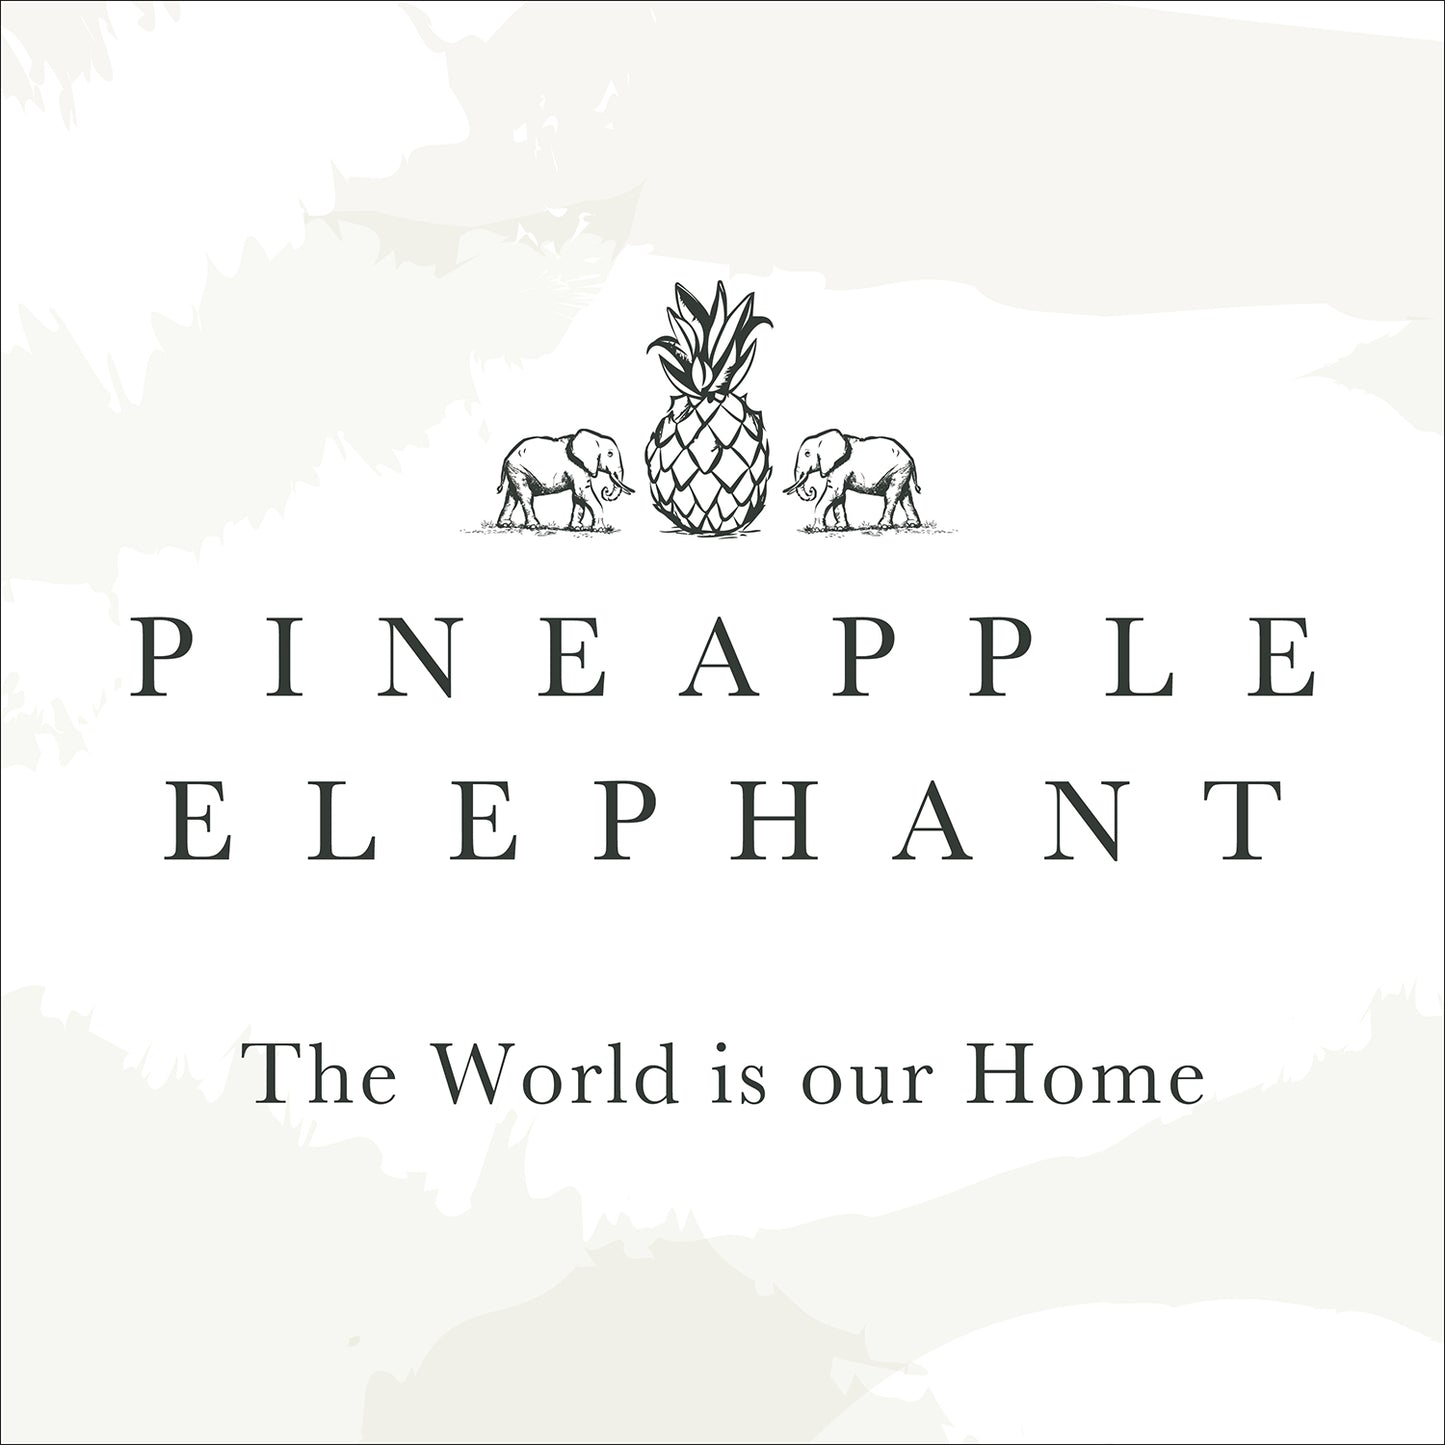 Pineapple Elephant Terracotta Tufted Stripes Cotton Cushion (45cm x 45cm)